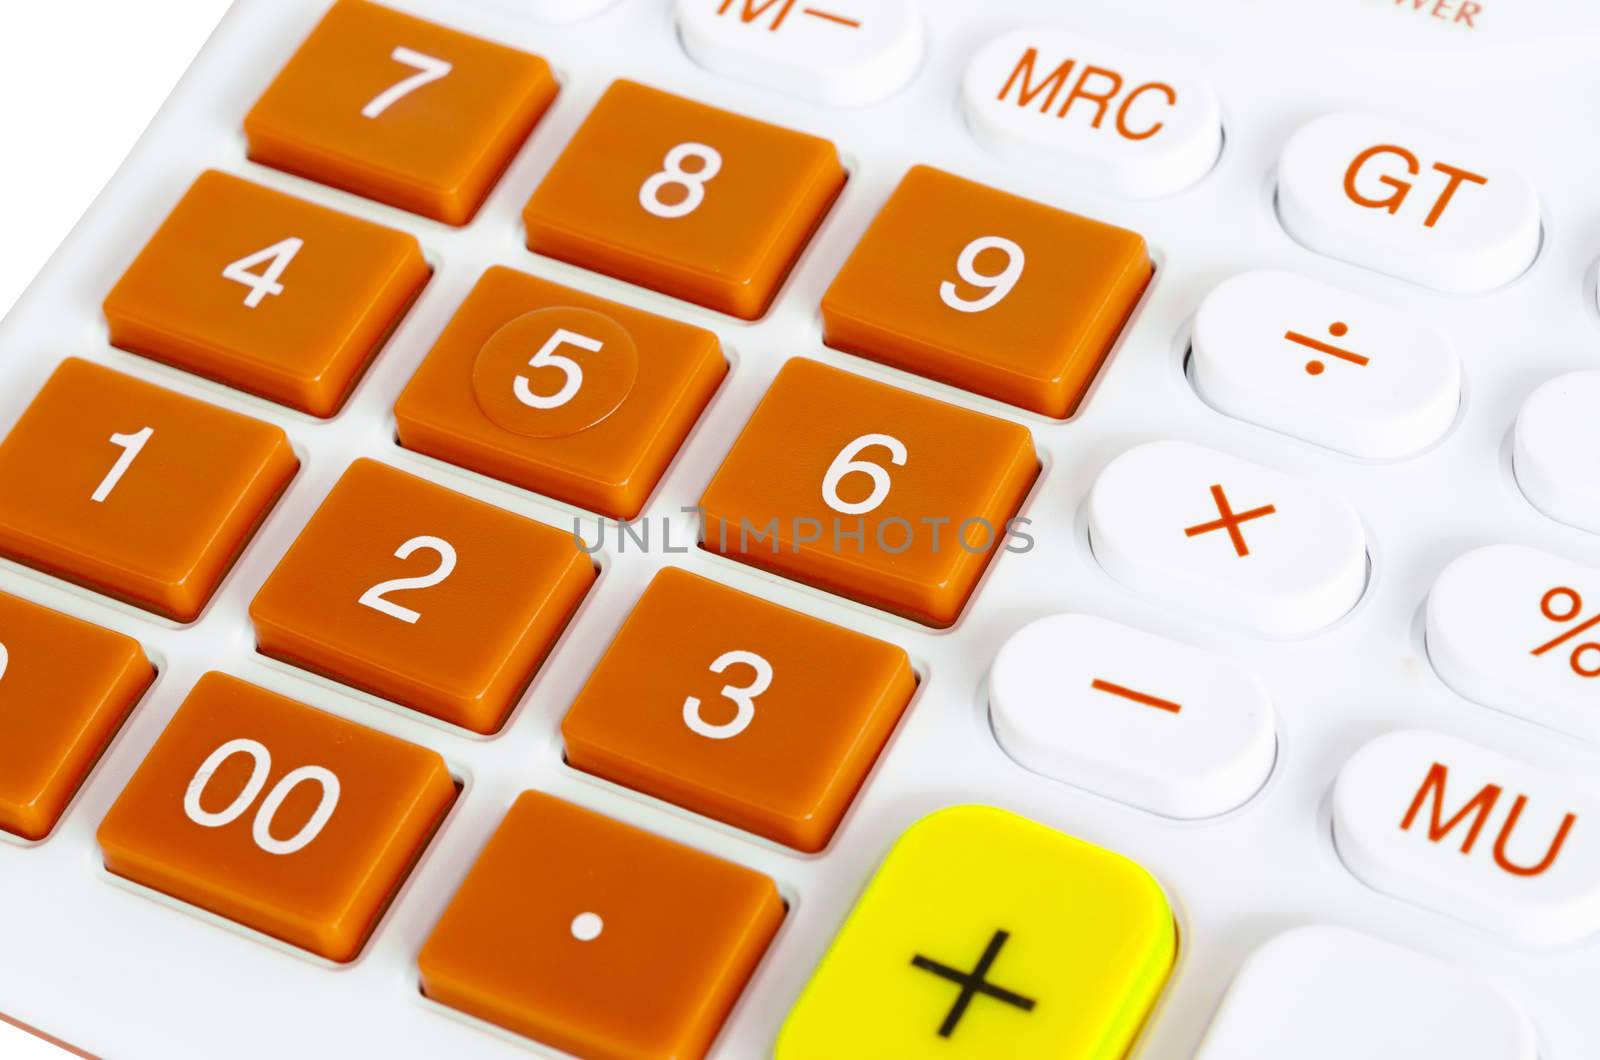 Calculator Keyboard macro close Up shot